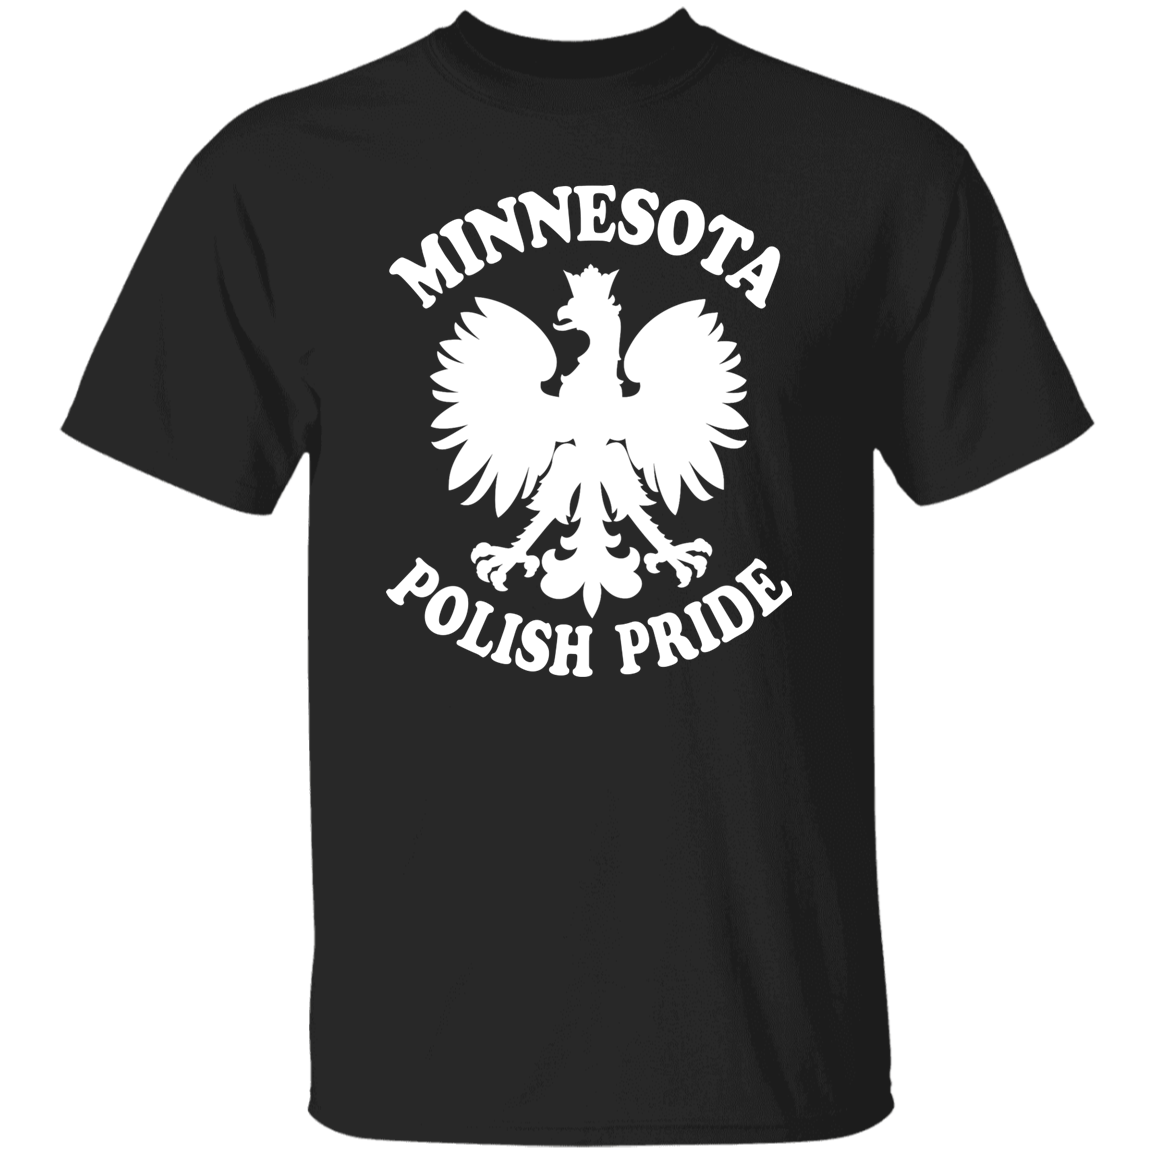 Minnesota Polish Pride Apparel CustomCat G500 5.3 oz. T-Shirt Black S